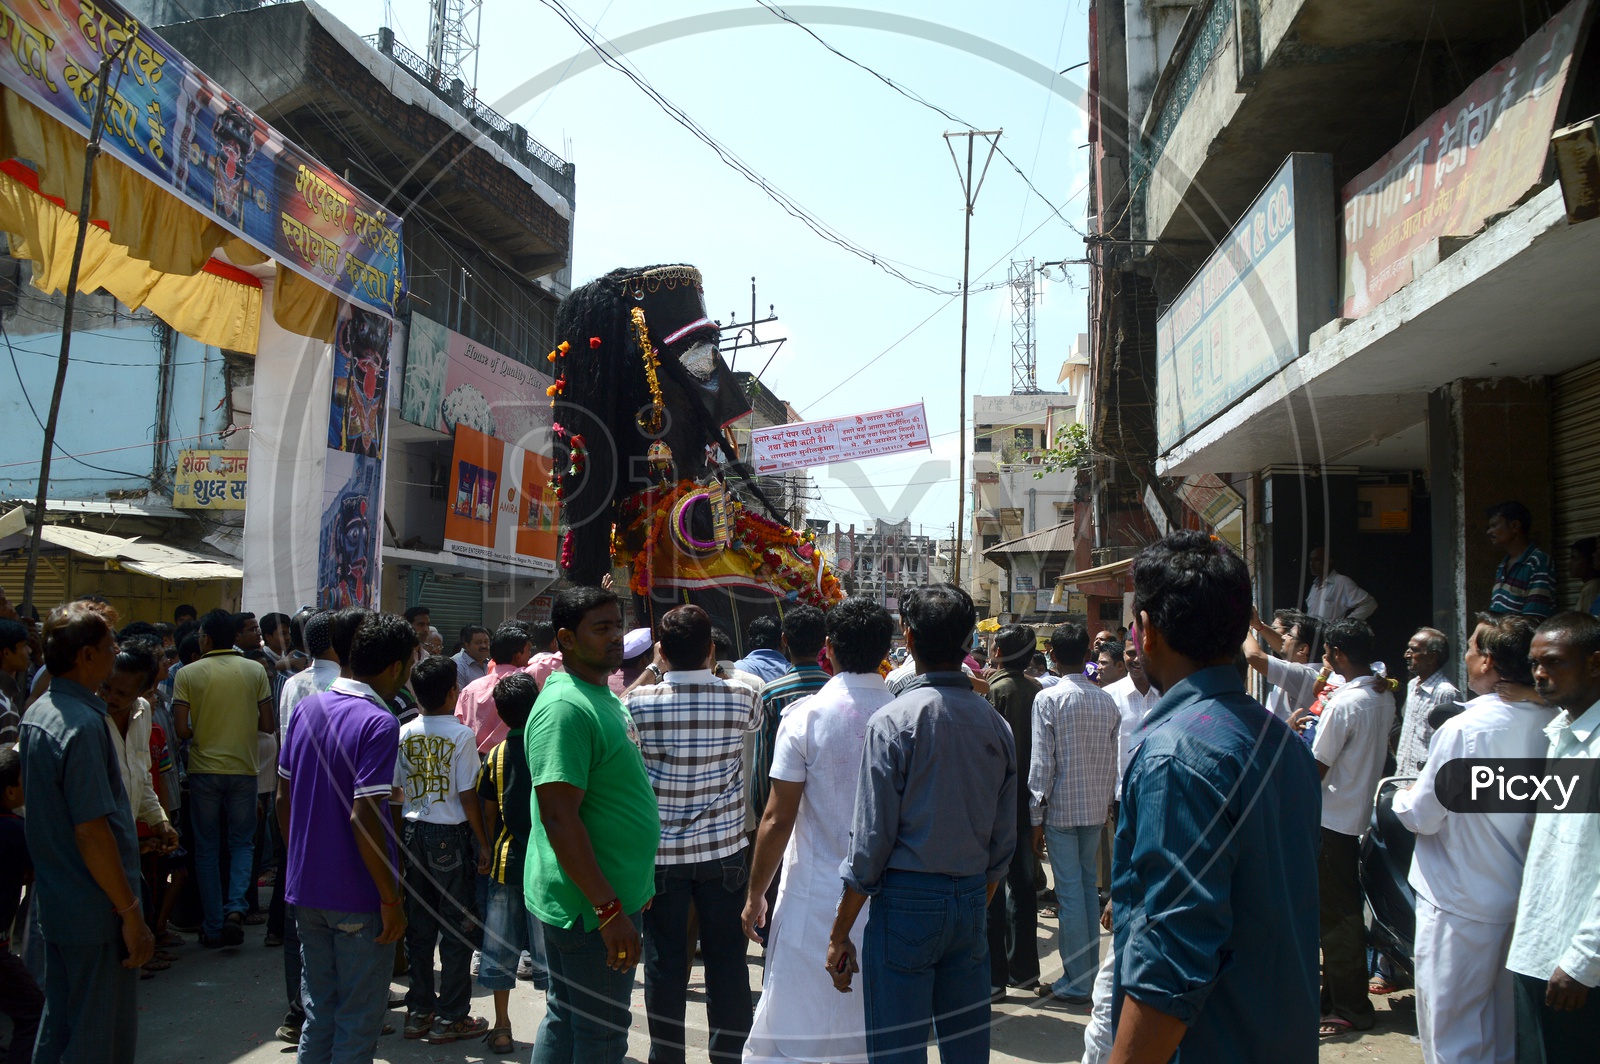 Kala Marbat  Procession On The Streets Of Nagpur